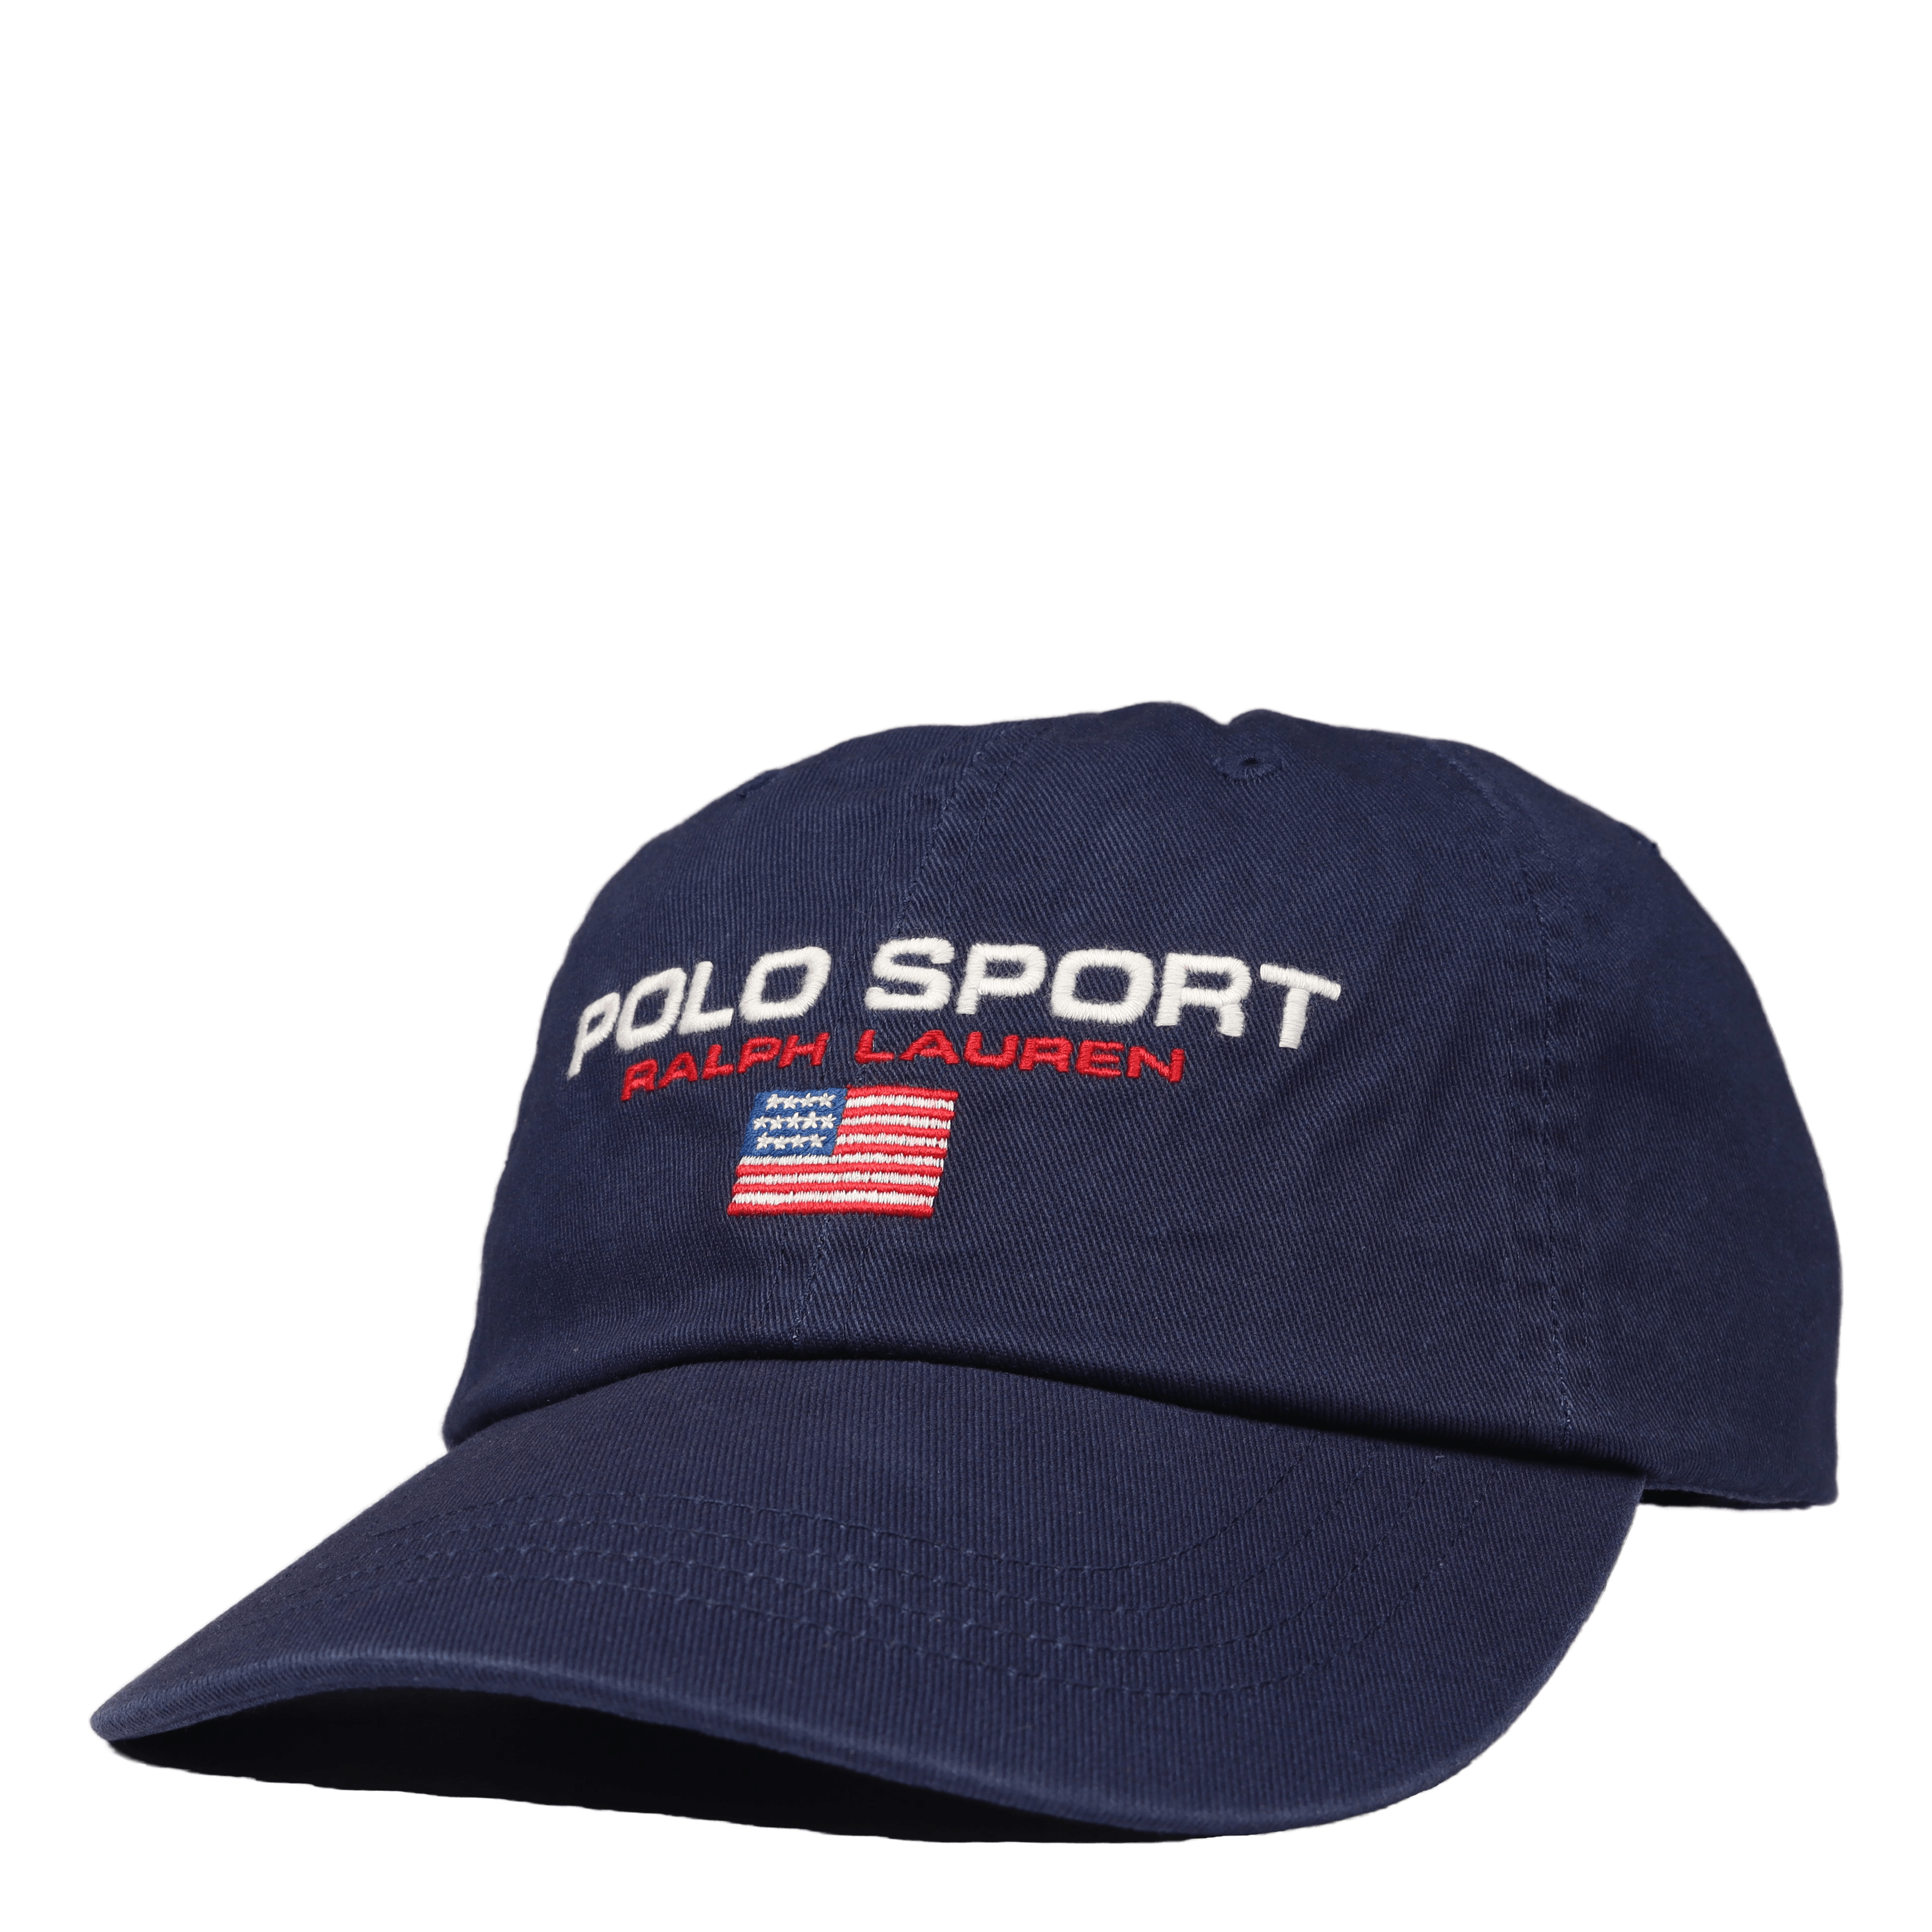 Polo Ralph Lauren Polo Sport Twill Ball Cap  